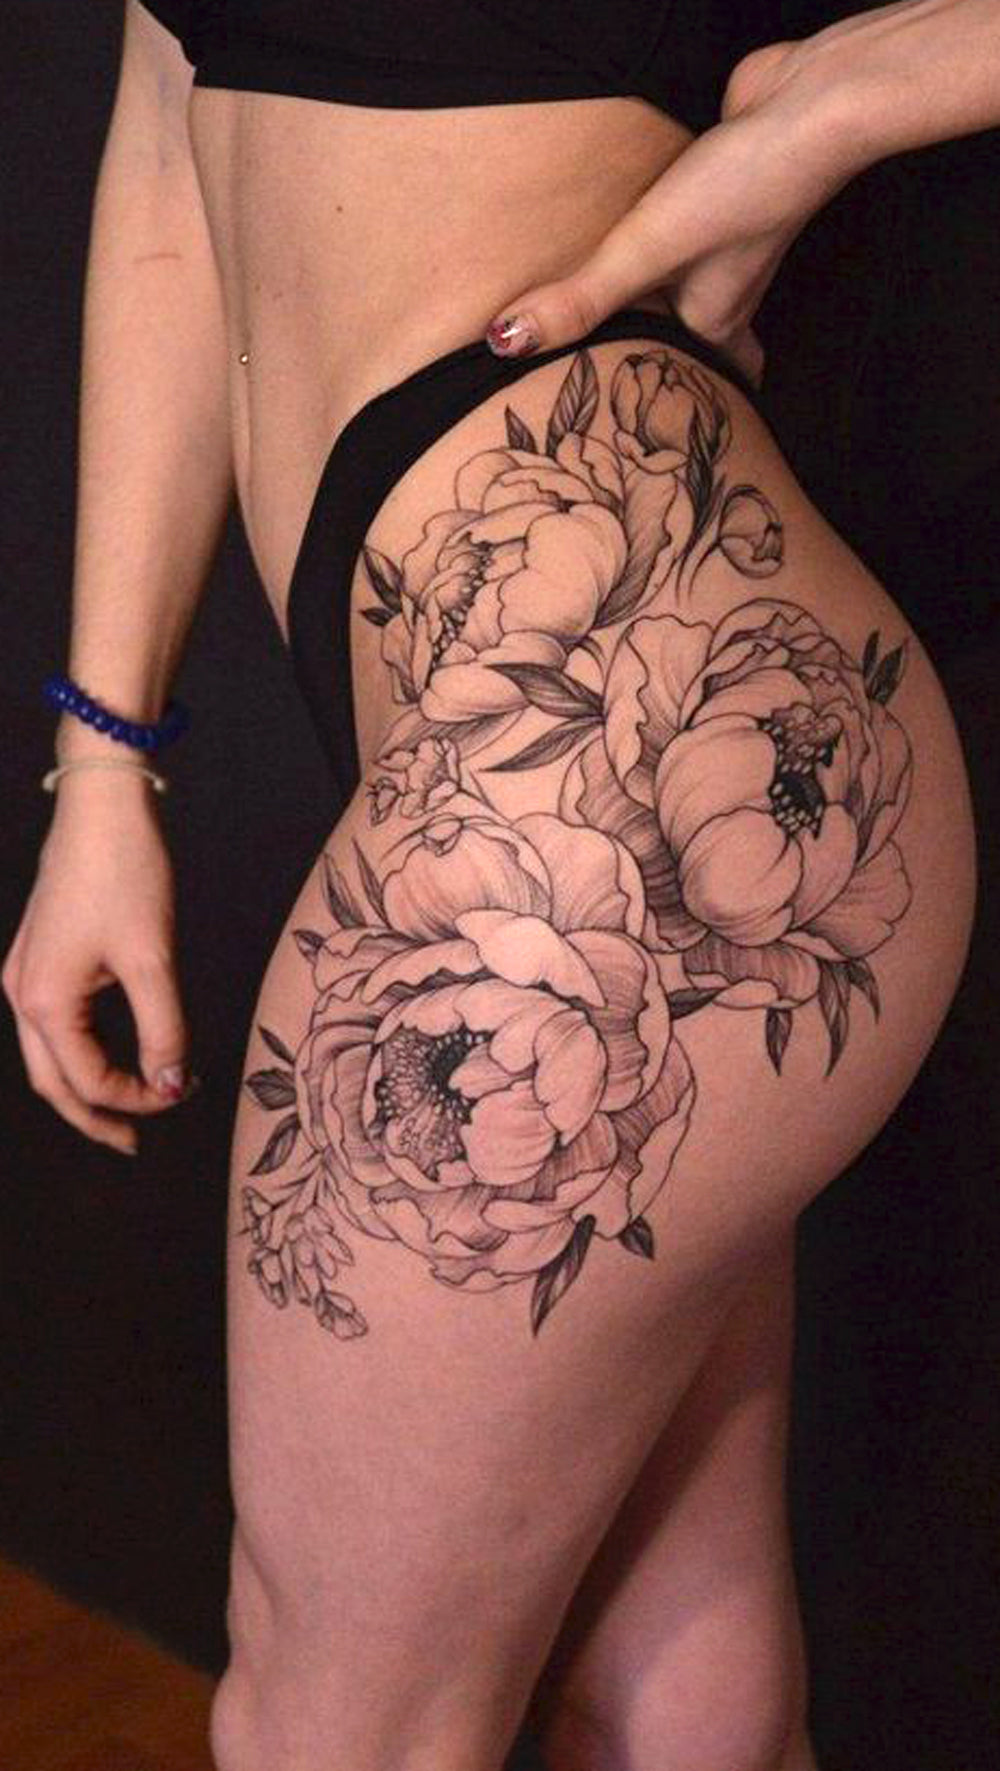 Floral Flower Thigh Tattoo Ideas for Women -  Ideas florales del tatuaje del muslo de la flor para las mujeres - www.MyBodiArt.com